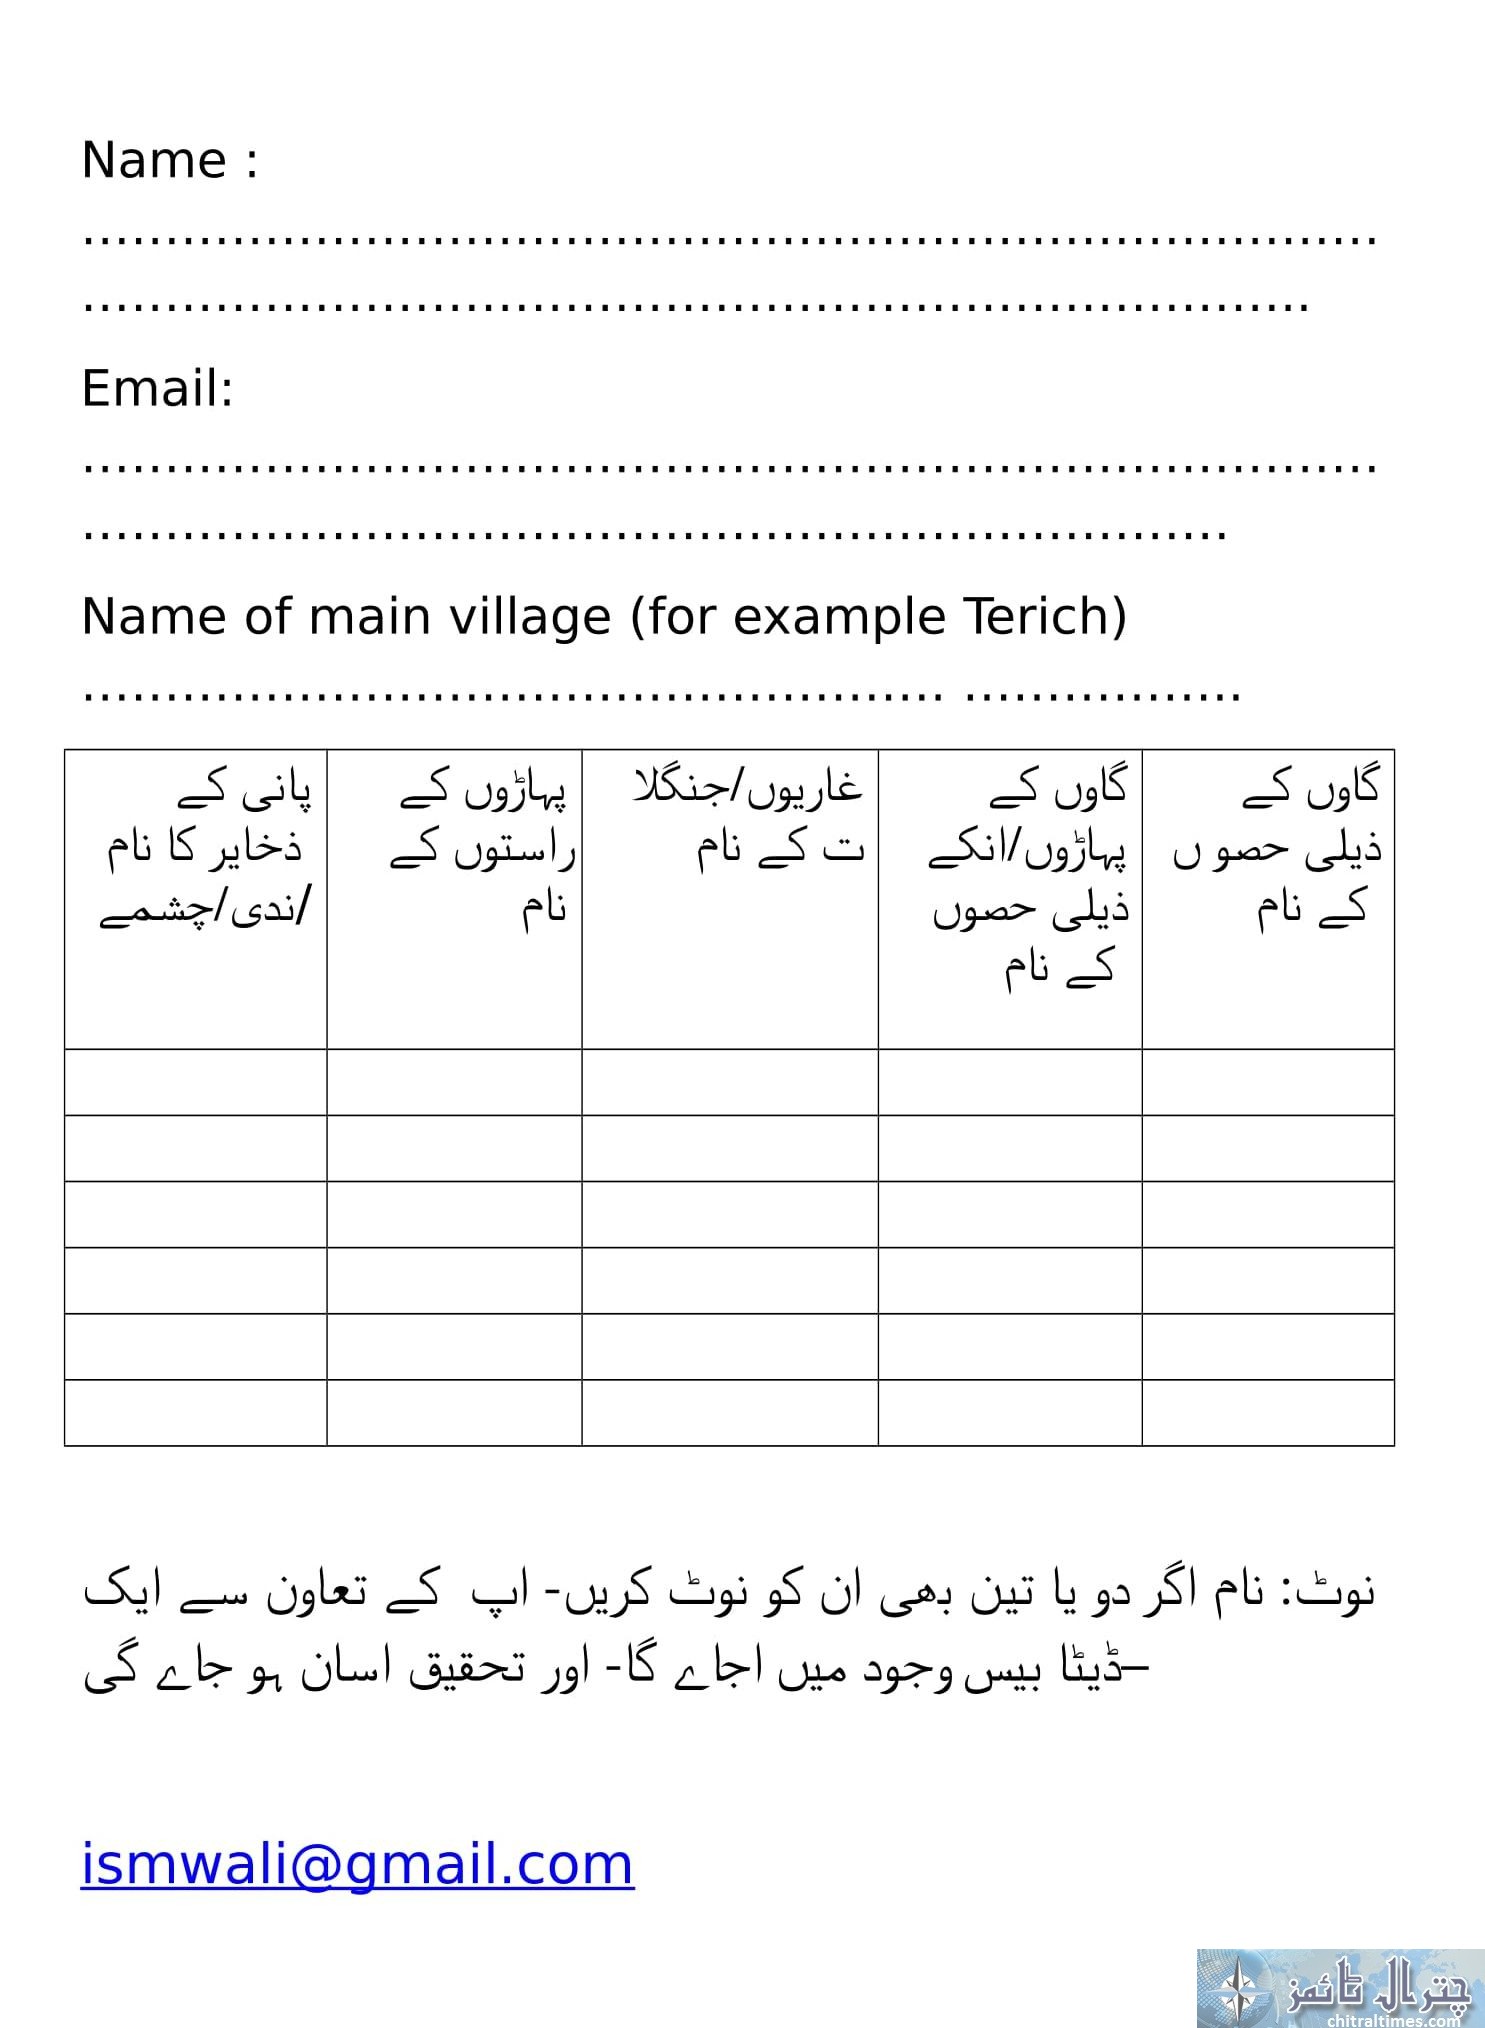 khowar data base form dr ismail wali 1